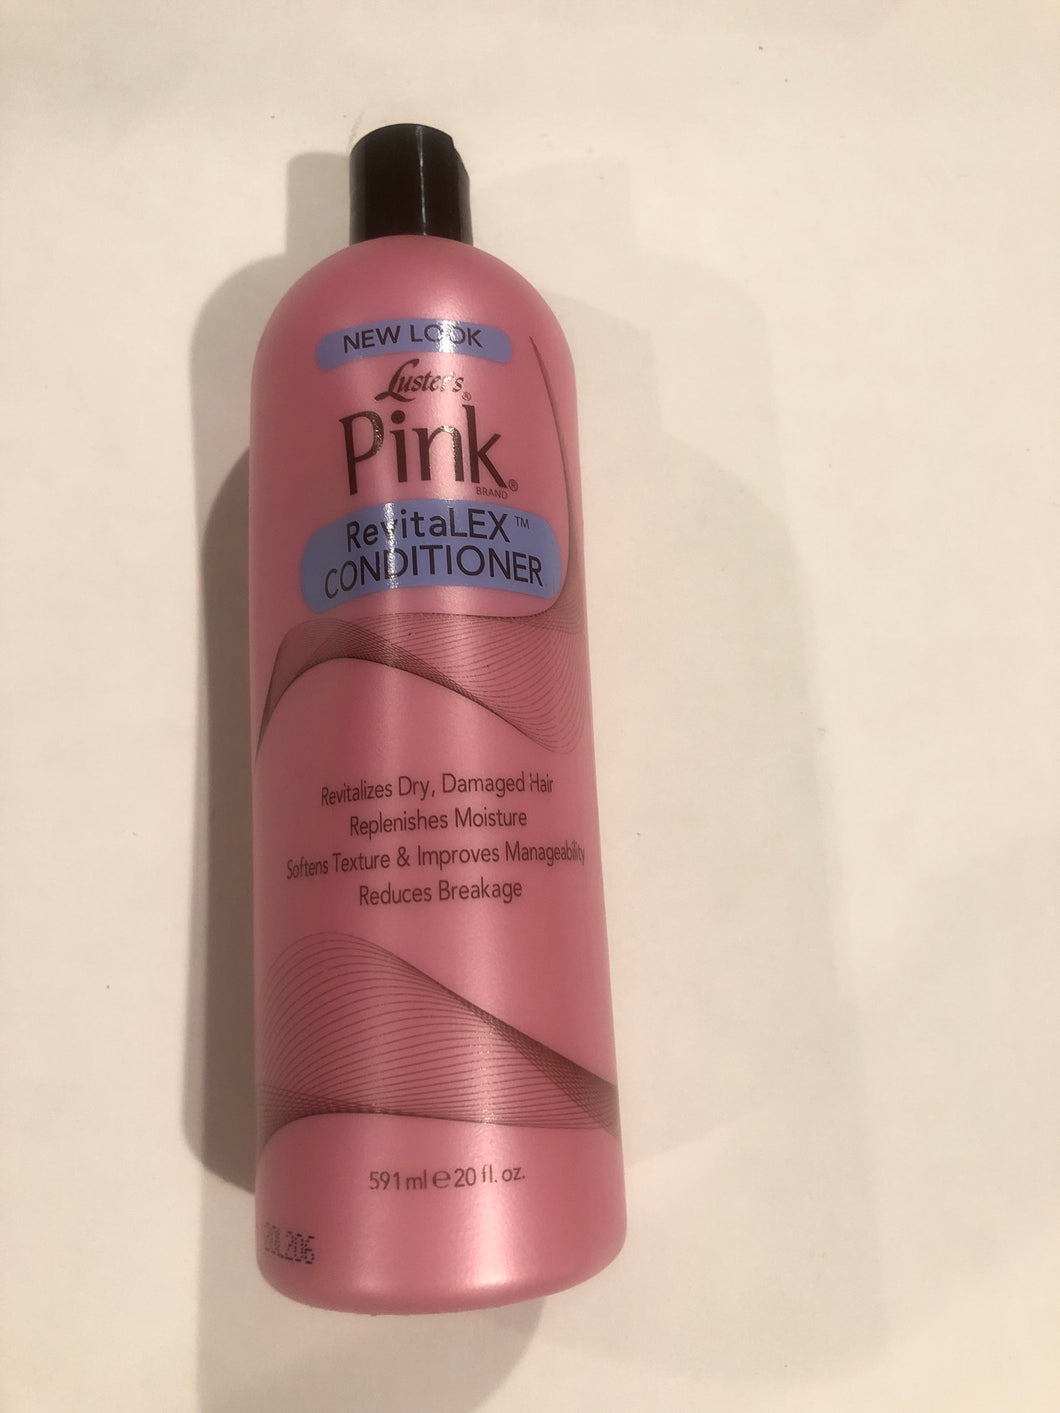 Luster’s Pink Revitalex Conditioner